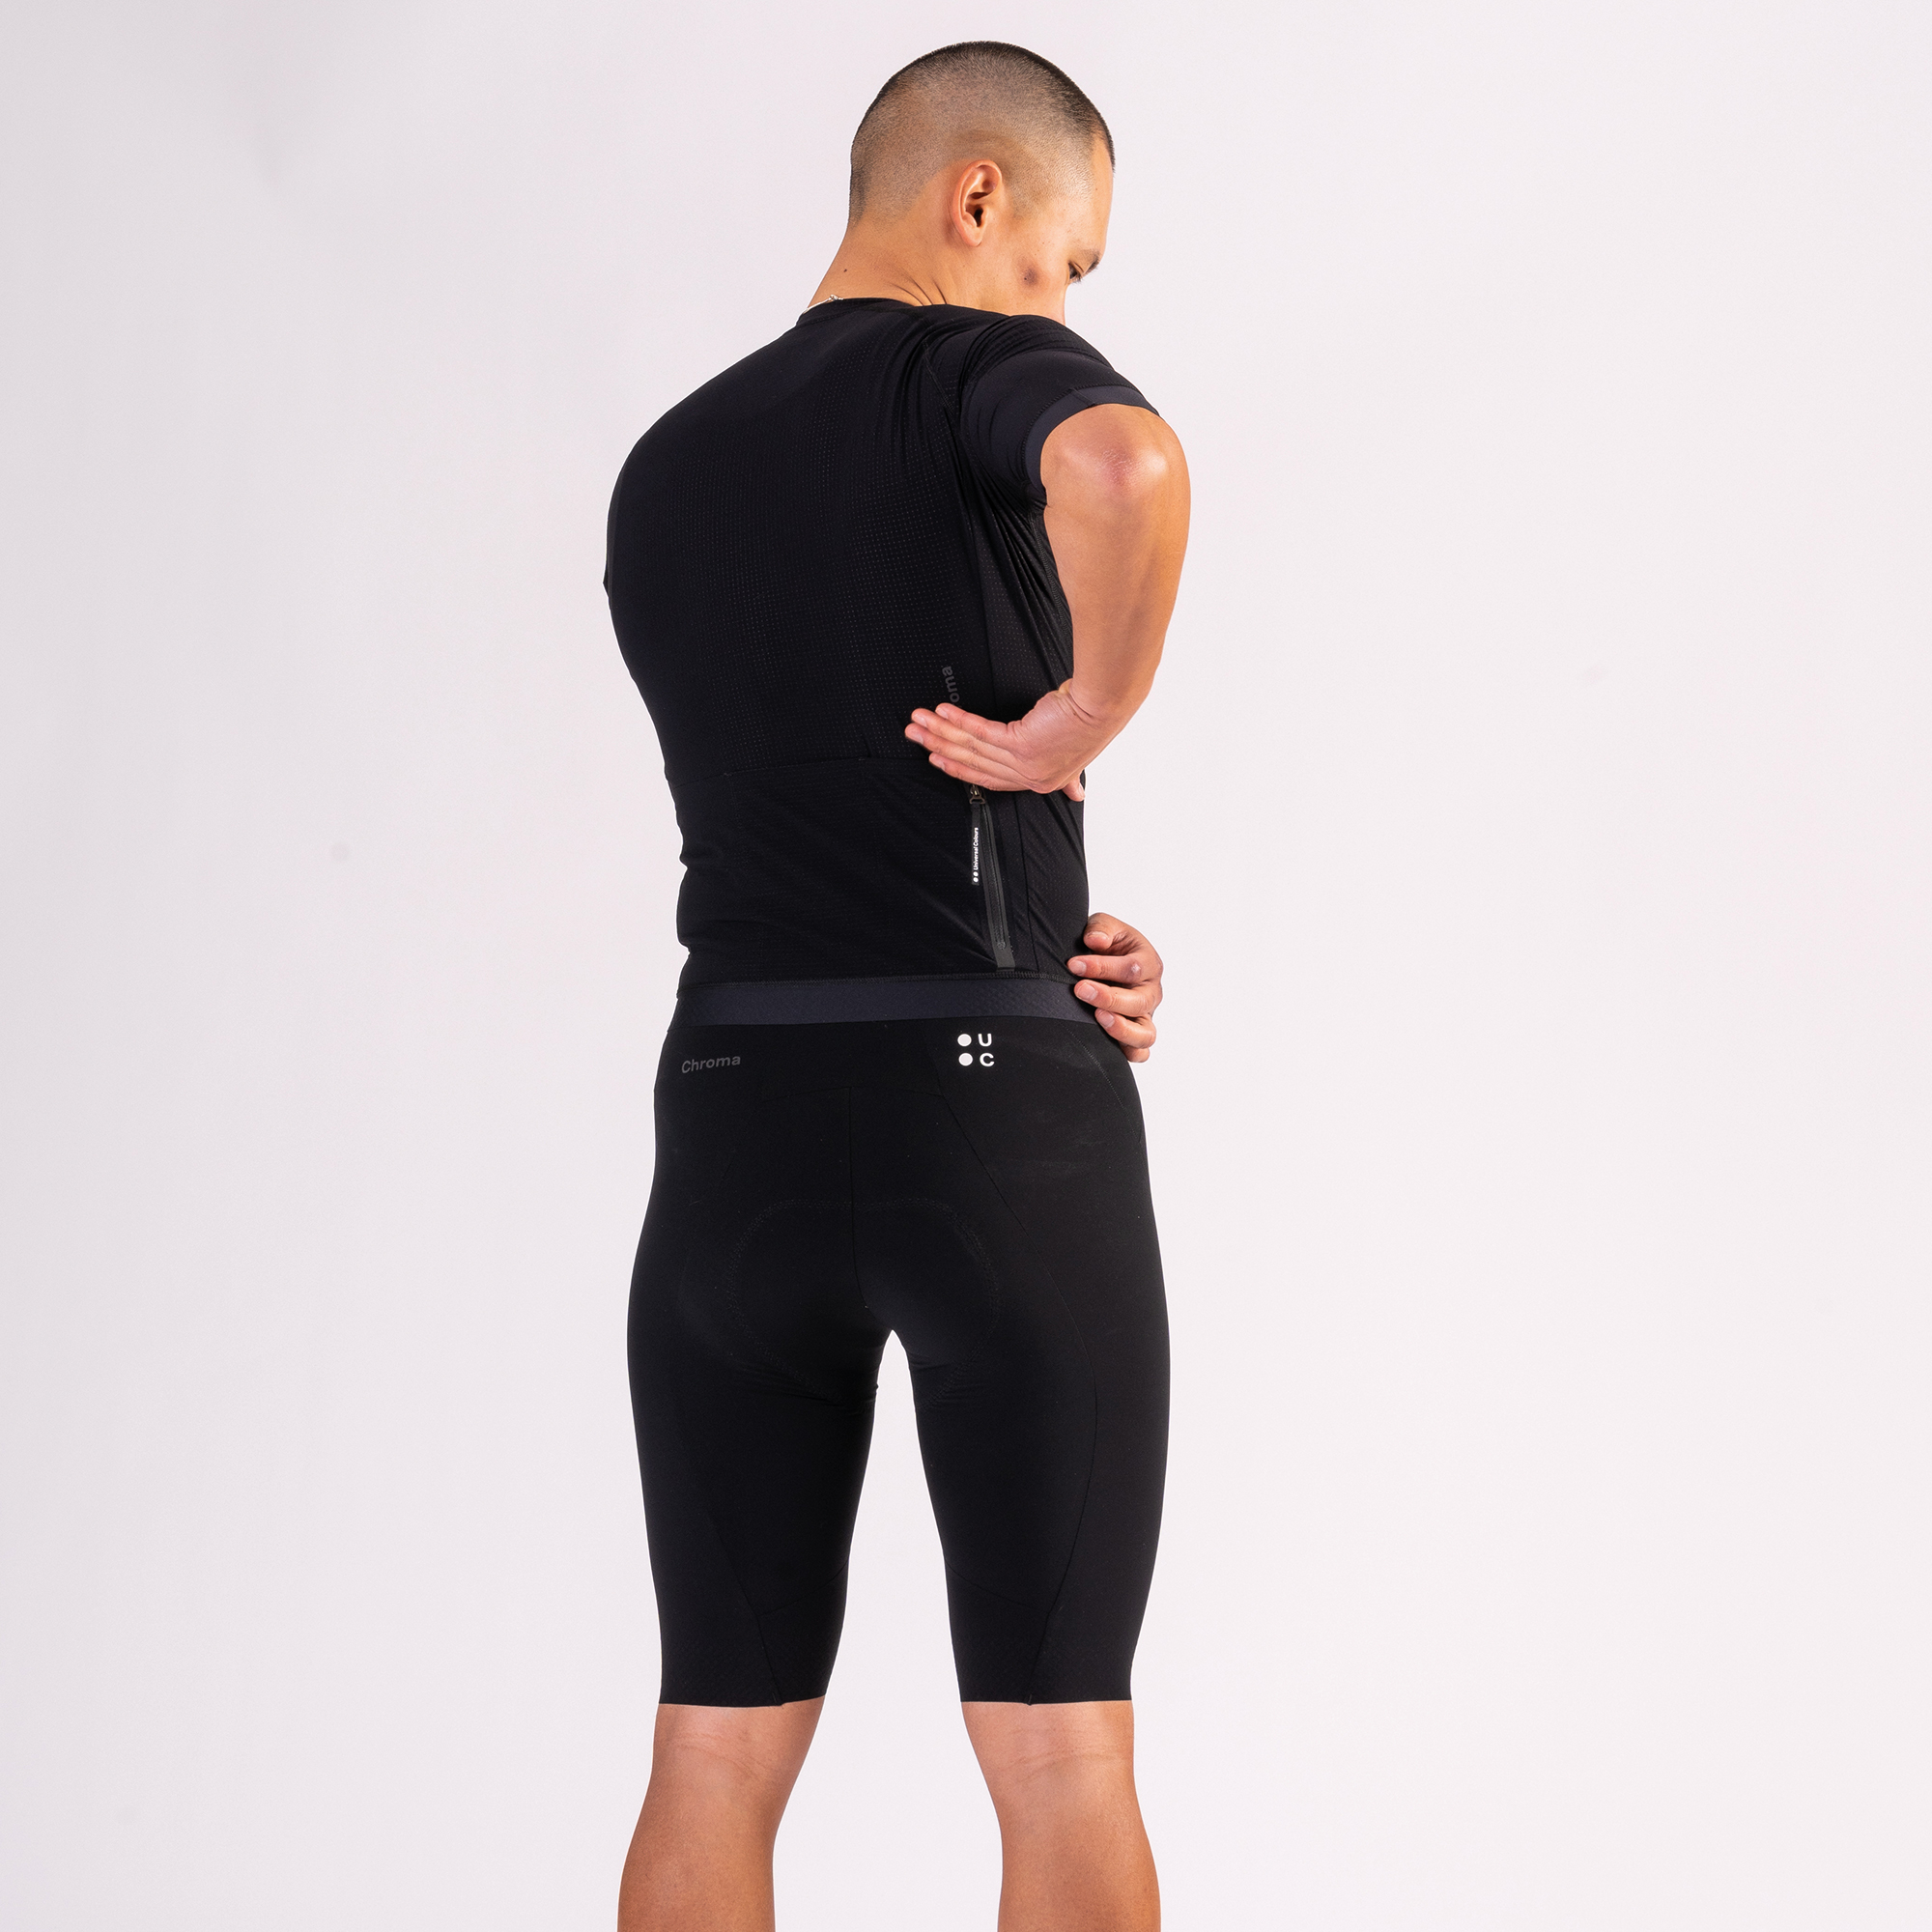 Chroma Men's Short Sleeve Jersey - Black